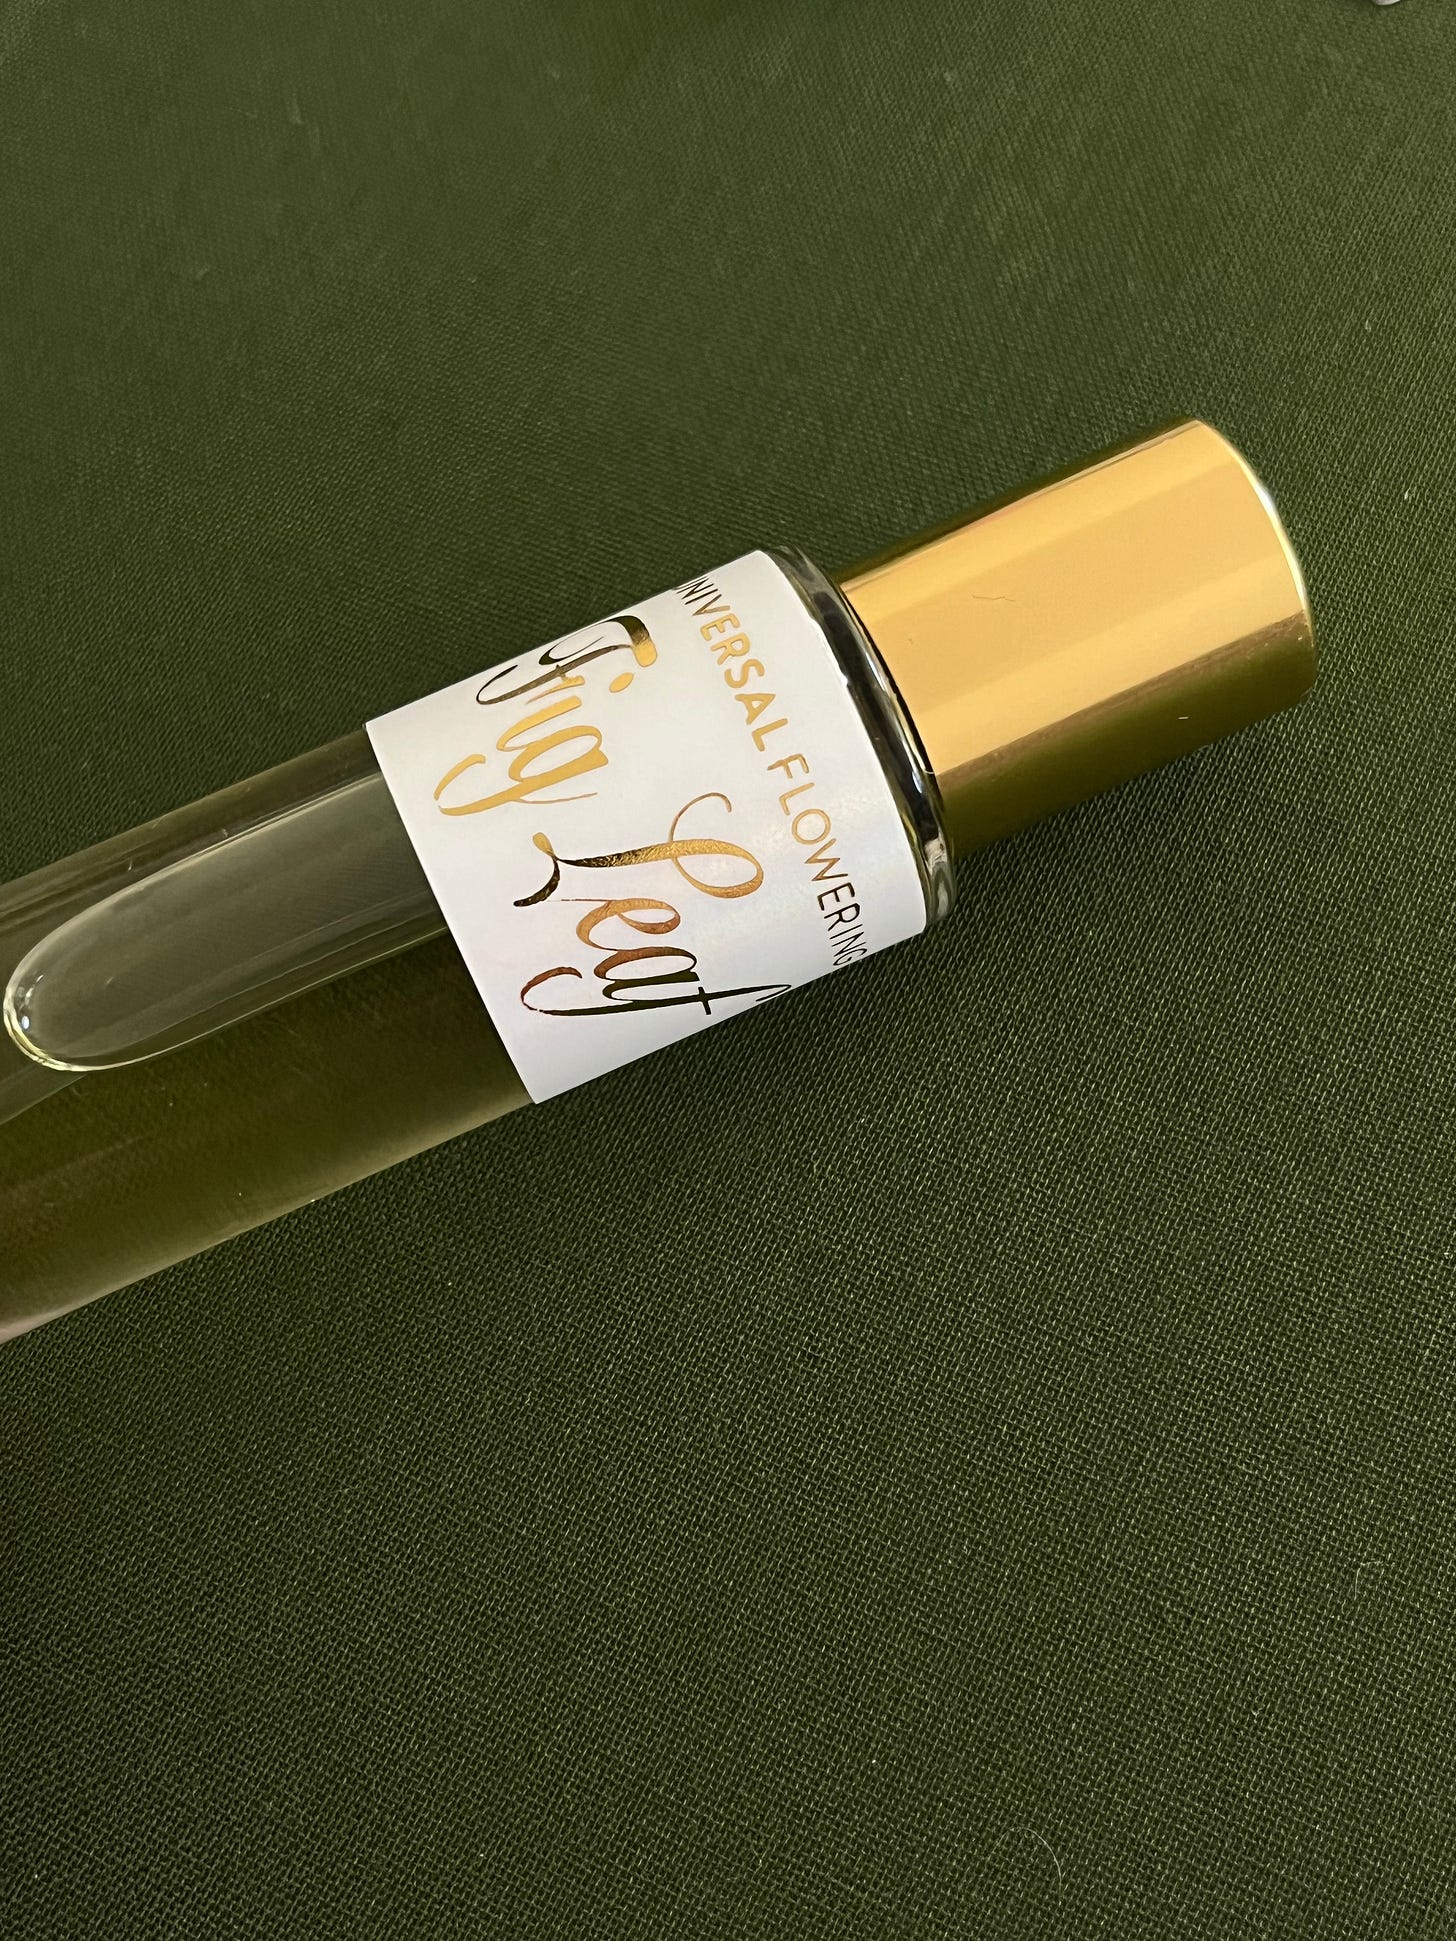 Perfume bottle labeled "Universal Flowering Fig Leaf"